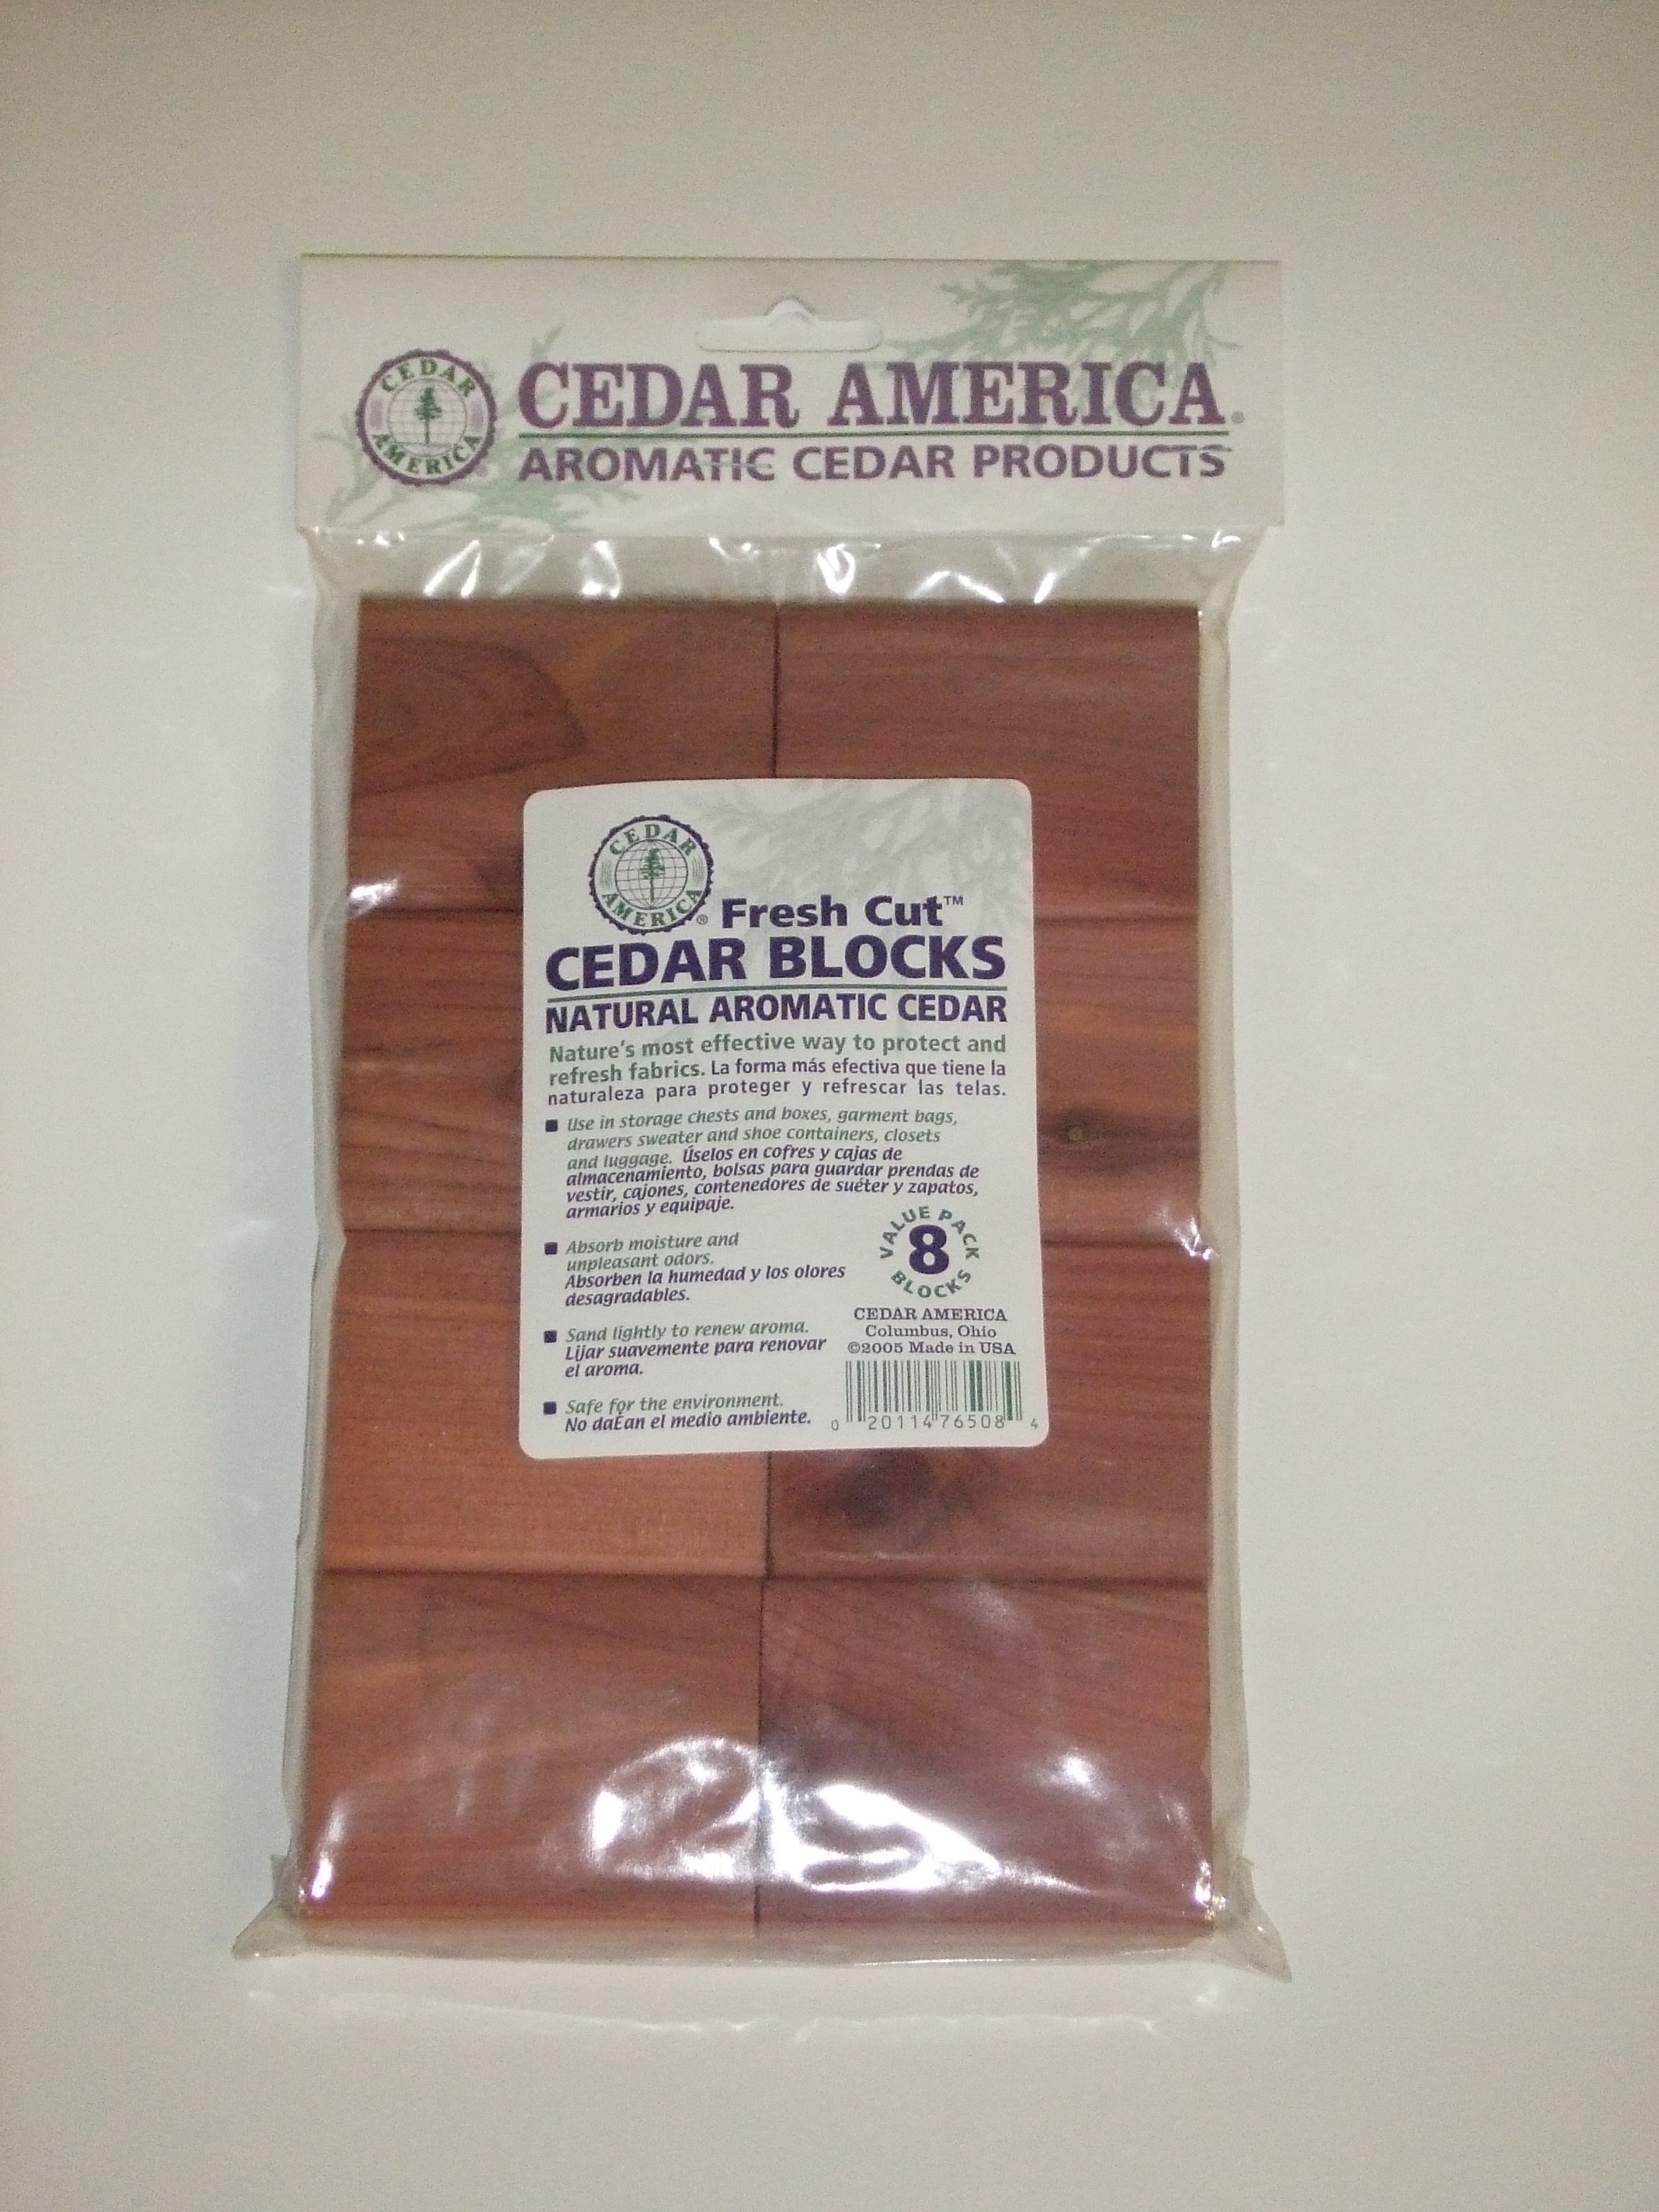 CedarAmerica Aromatic Red Cedar Blocks - Natural Indoor Insect